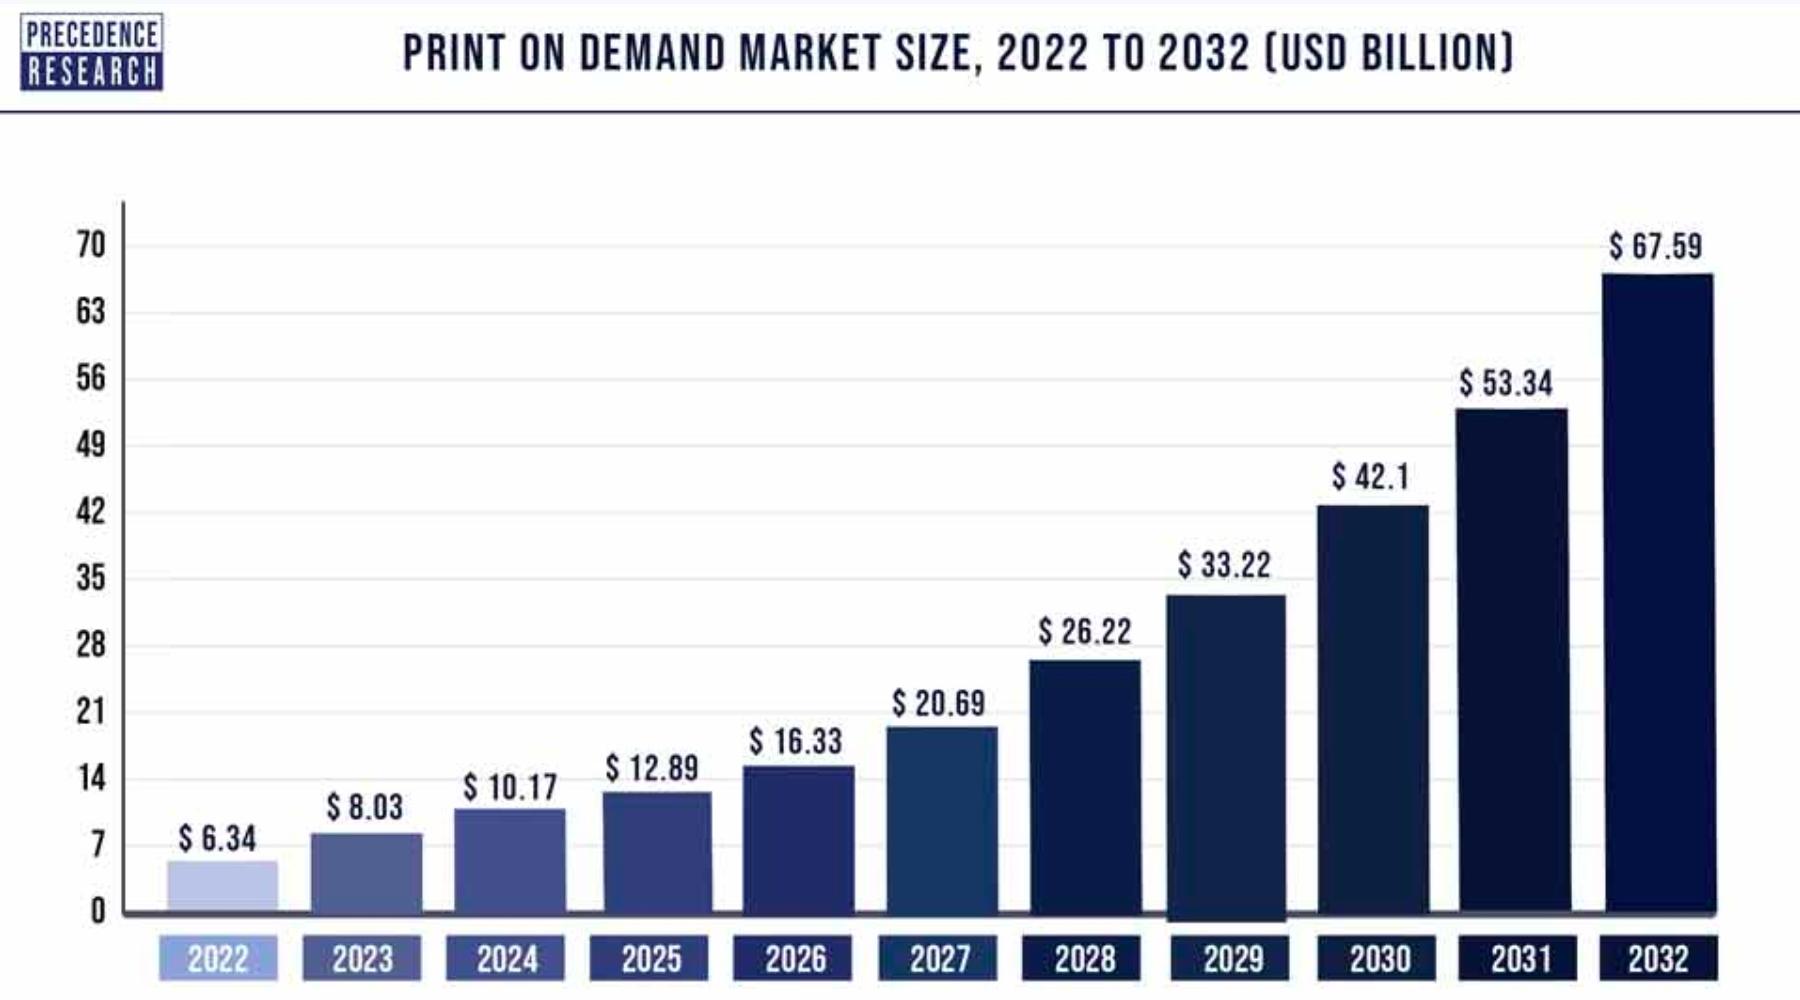 Print-on-demand market size